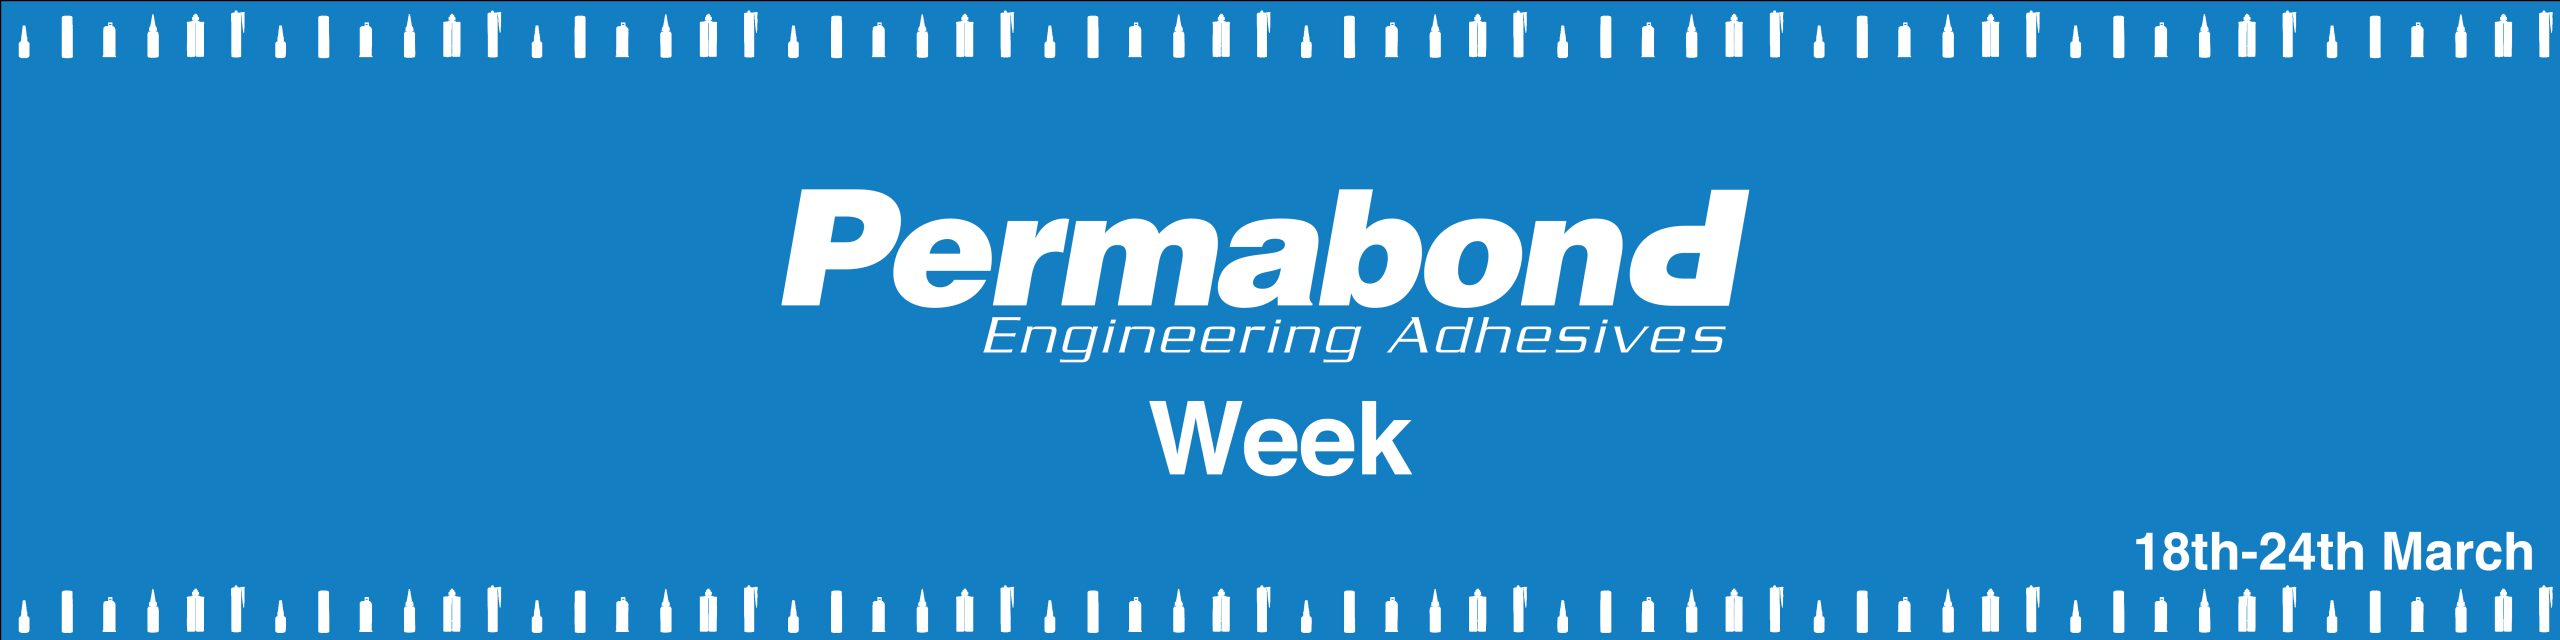 Permabond week starts now!